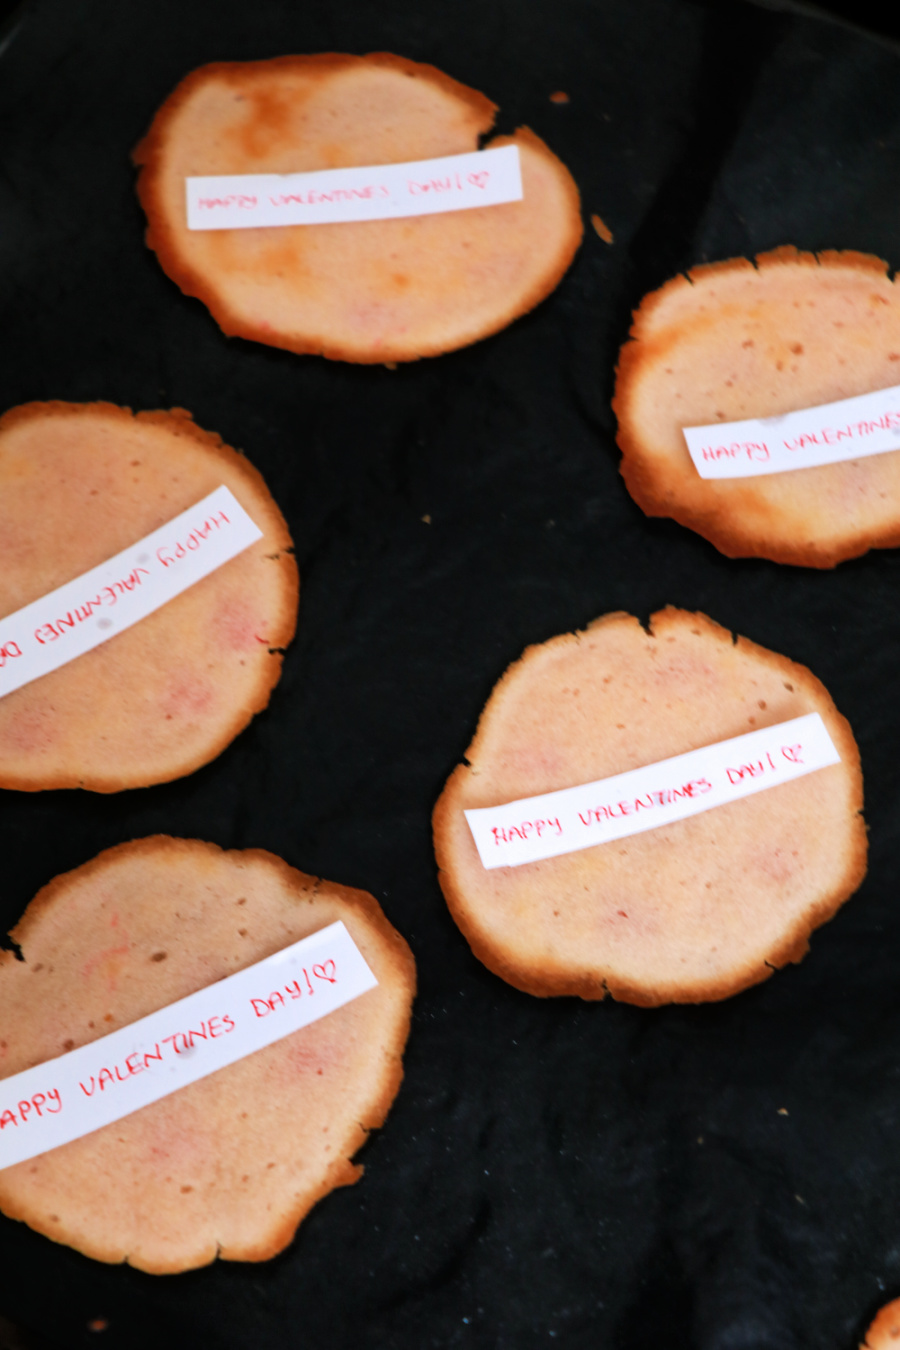 Sweet Valentine's Fortune Cookie Recipe